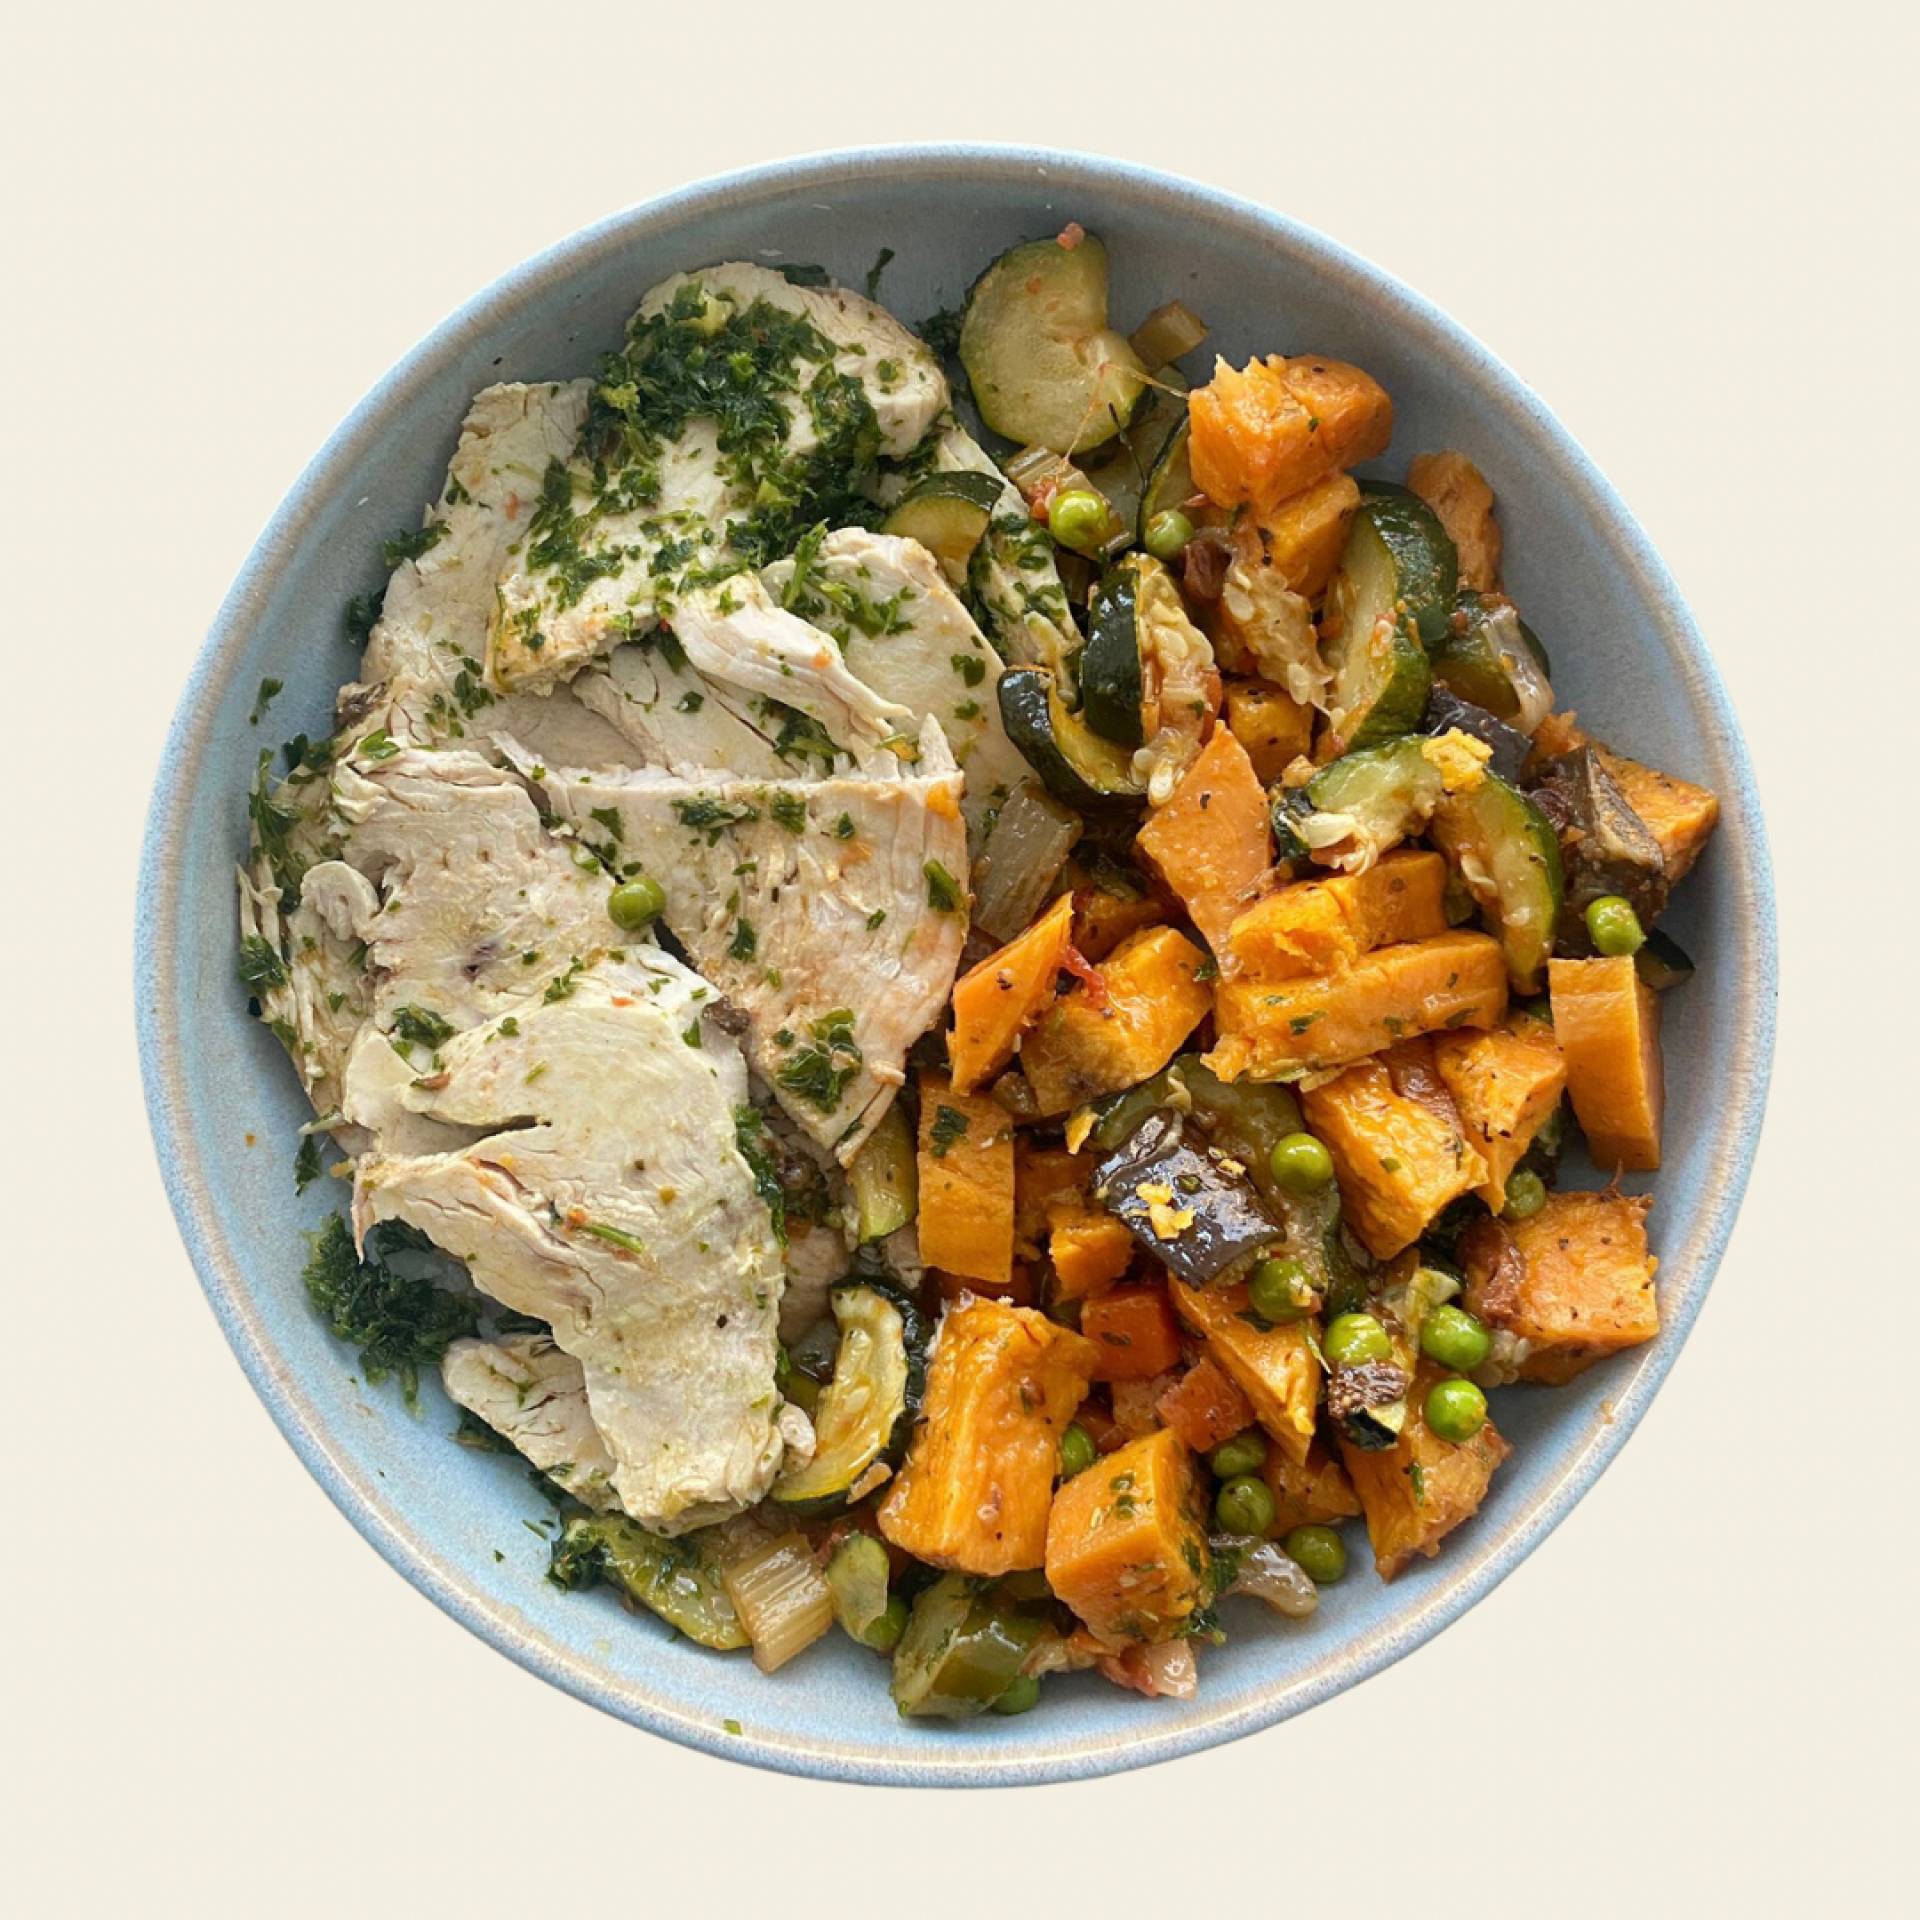 Roasted turkey, vegetable caponata, baked sweet potatoes,chimichurri sauce